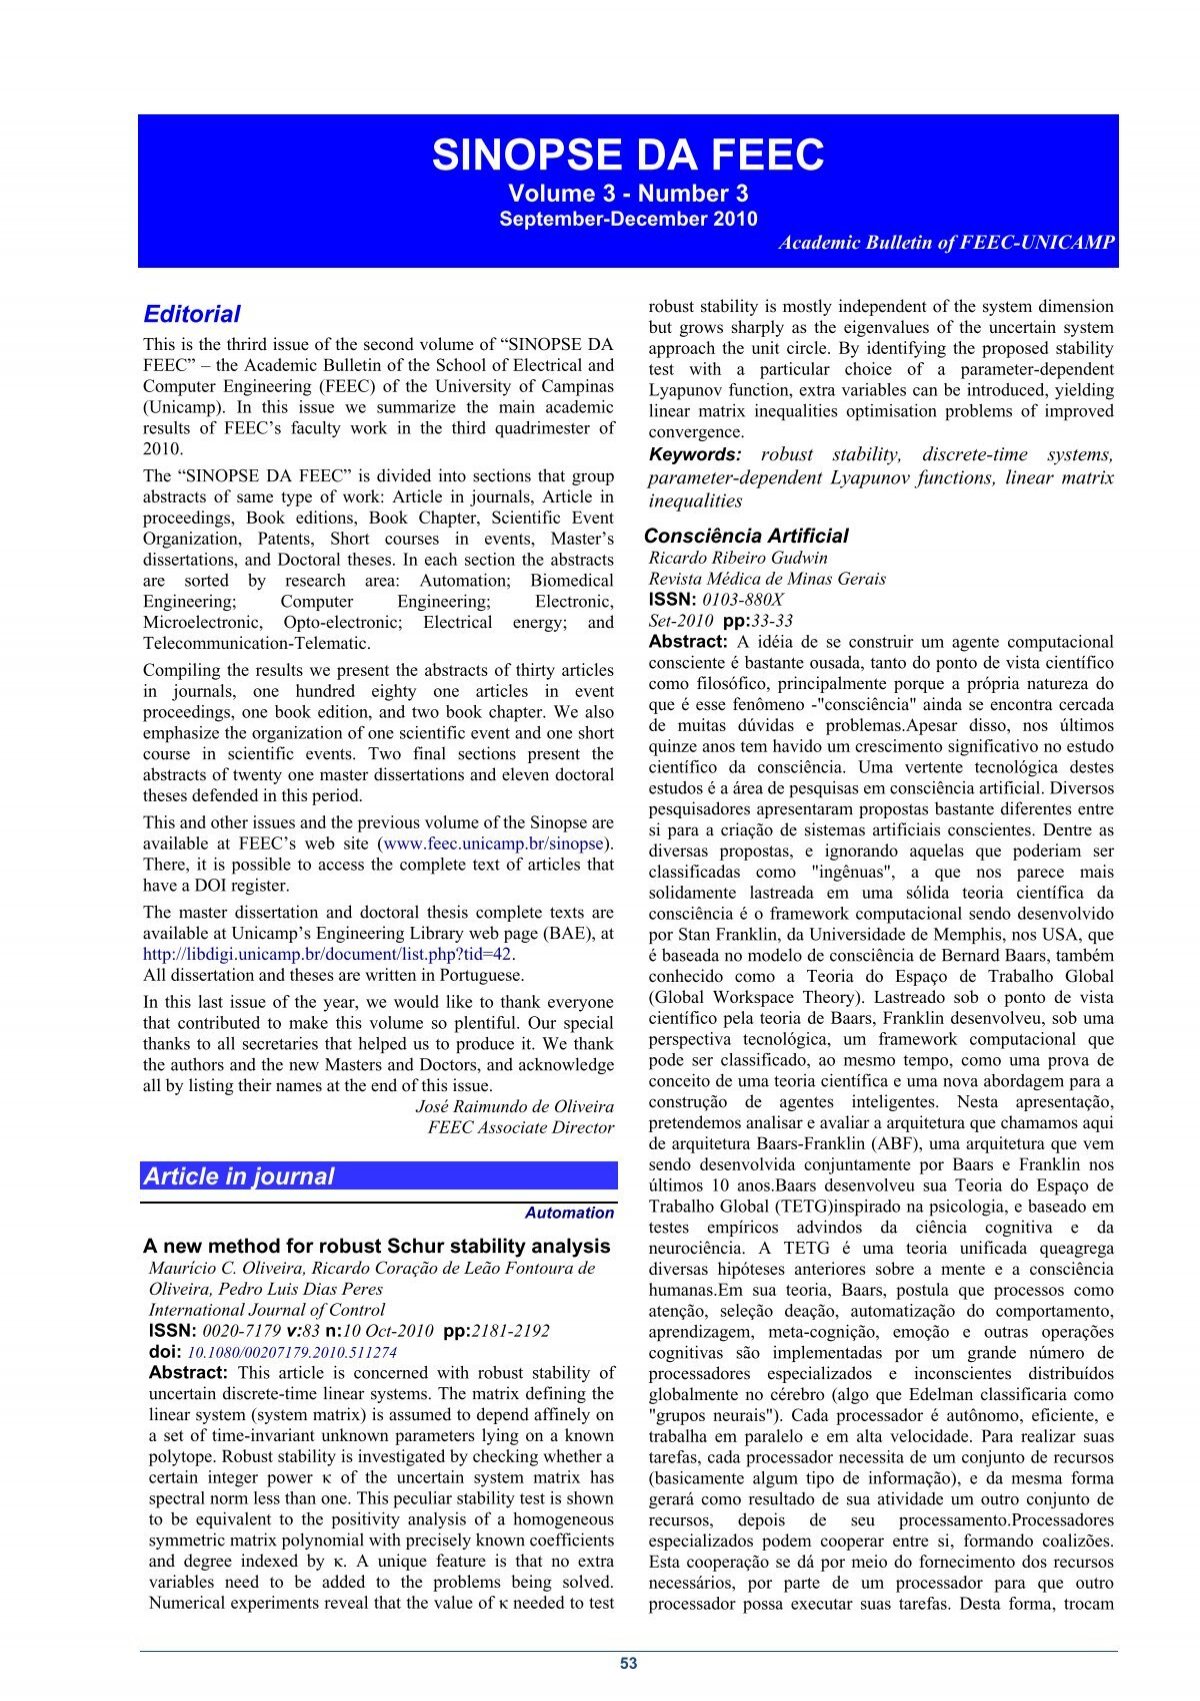 sinopseV2n3.pdf - FEEC - Unicamp